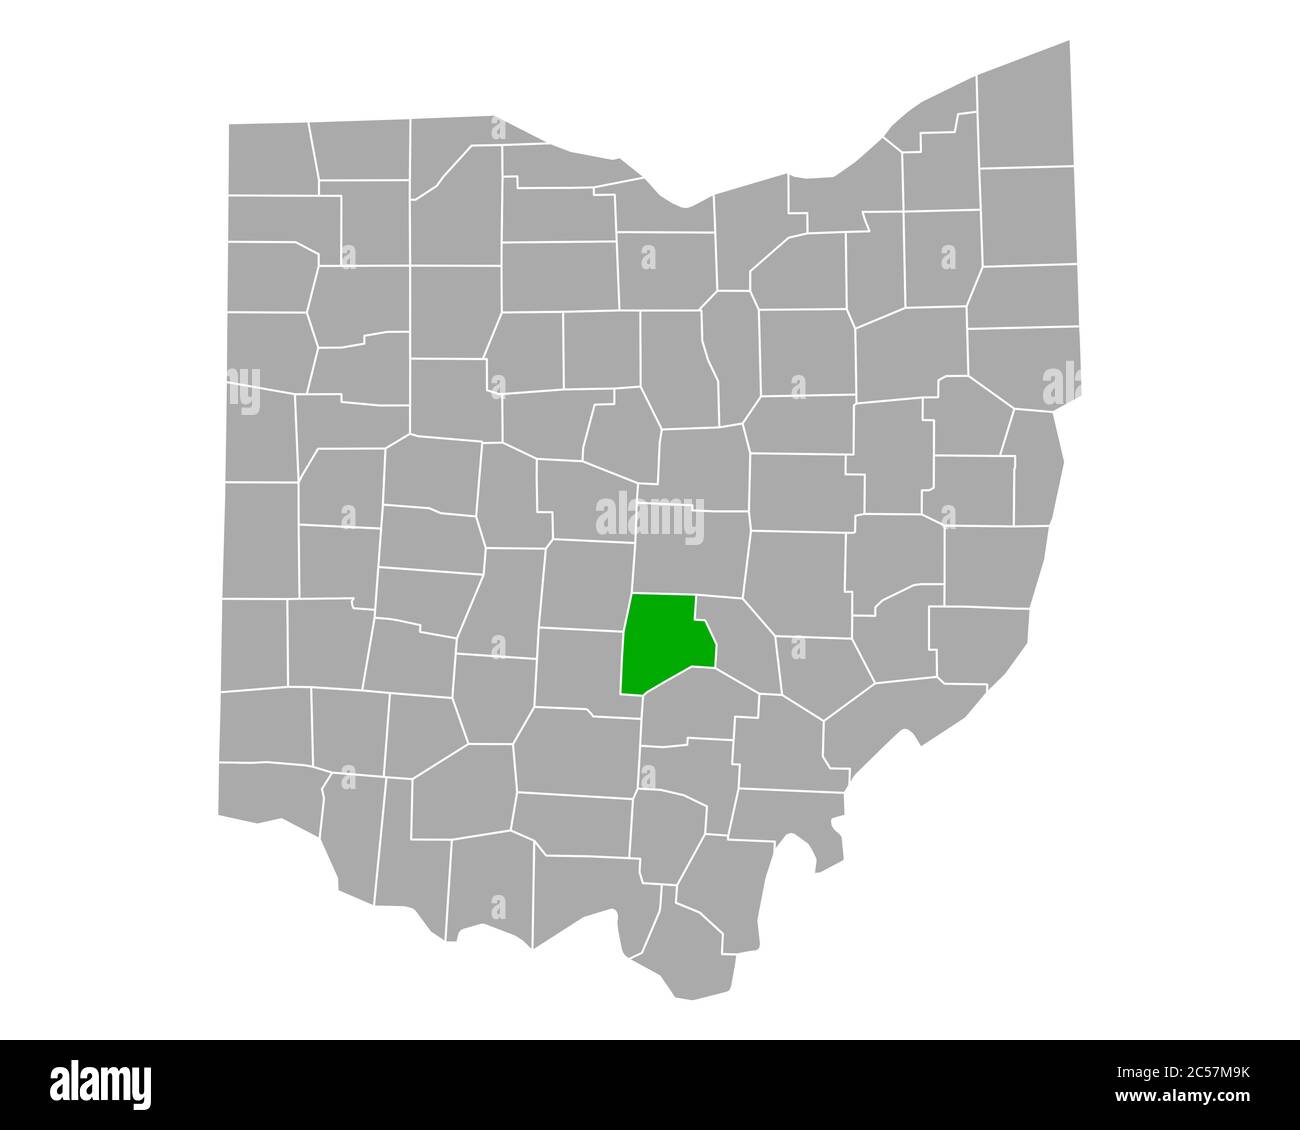 Map of Fairfield in Ohio Stock Photo